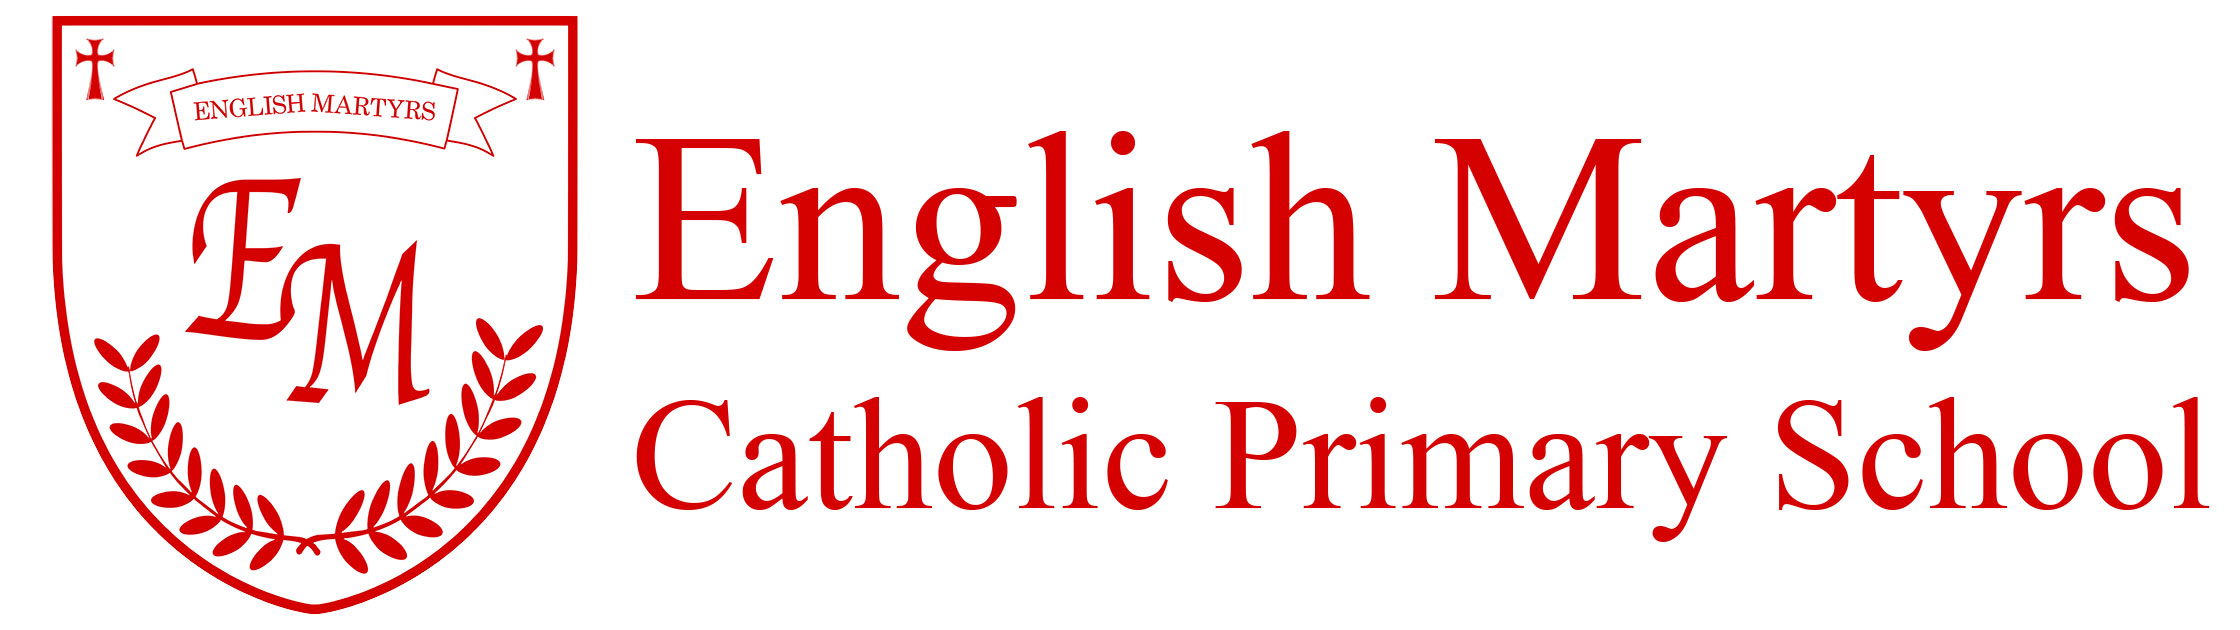 English Martyrs' Catholic Primary School